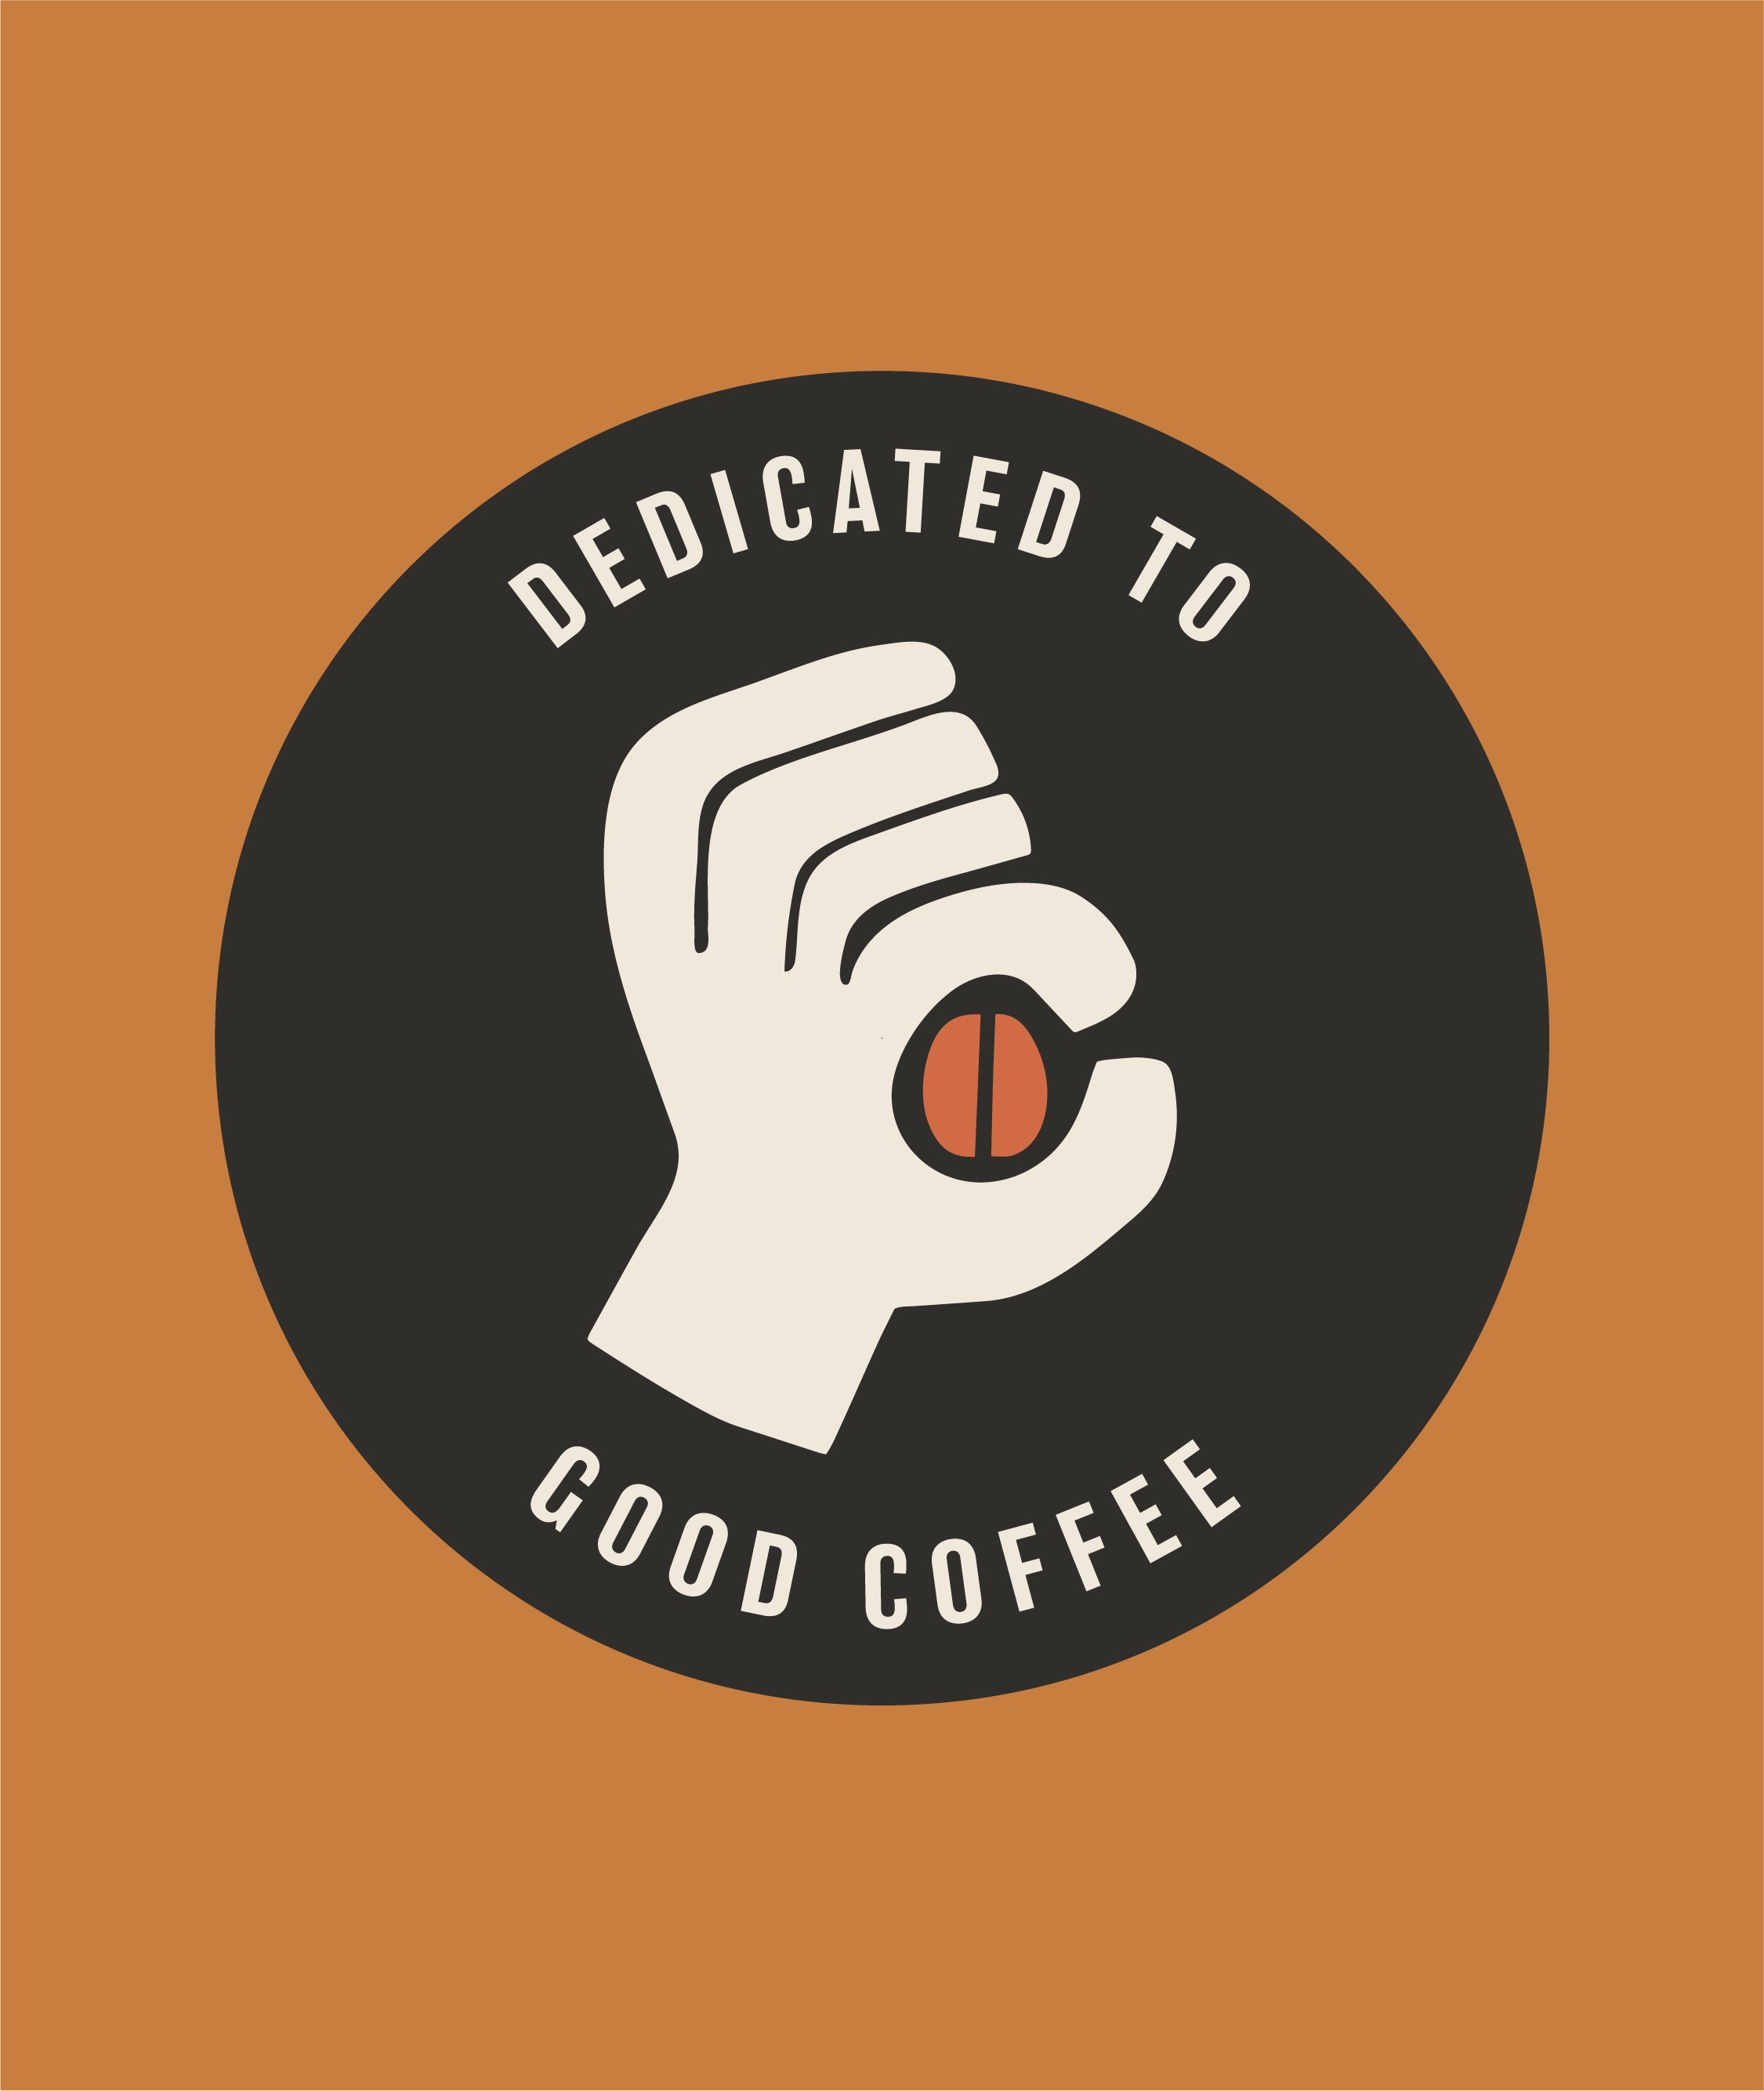 Dedicated to good coffee Mission Coffee